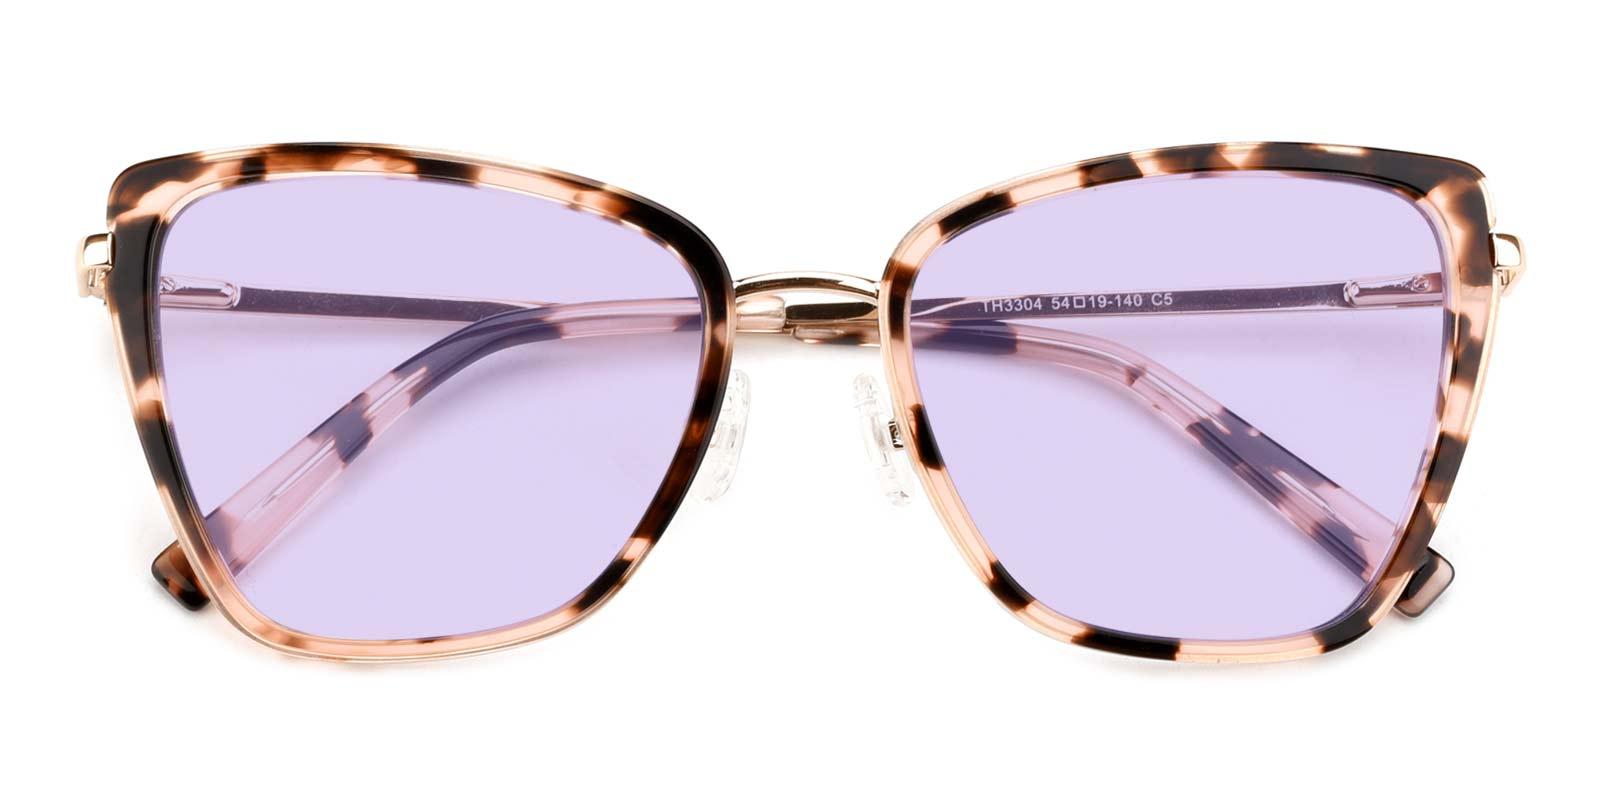 Nellie-Pink-Cat-Acetate-Eyeglasses-detail